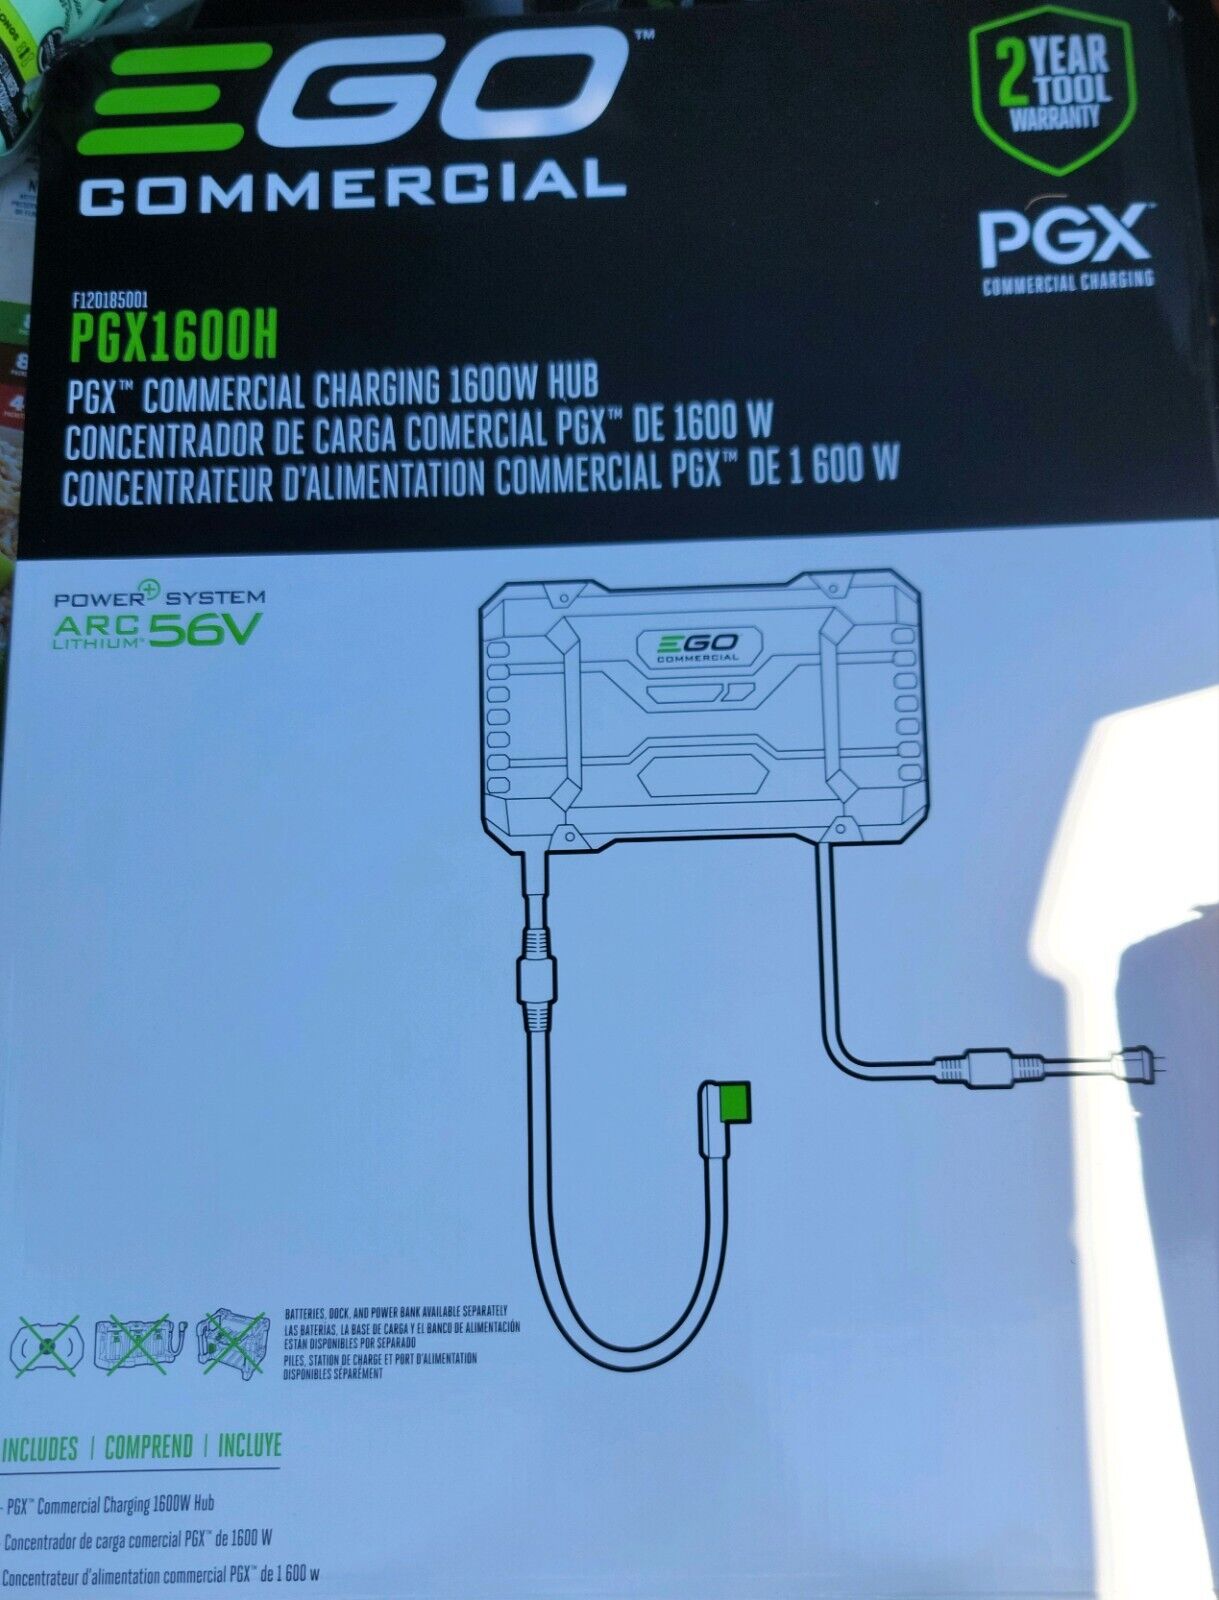 PGX Commercial Charging Hub